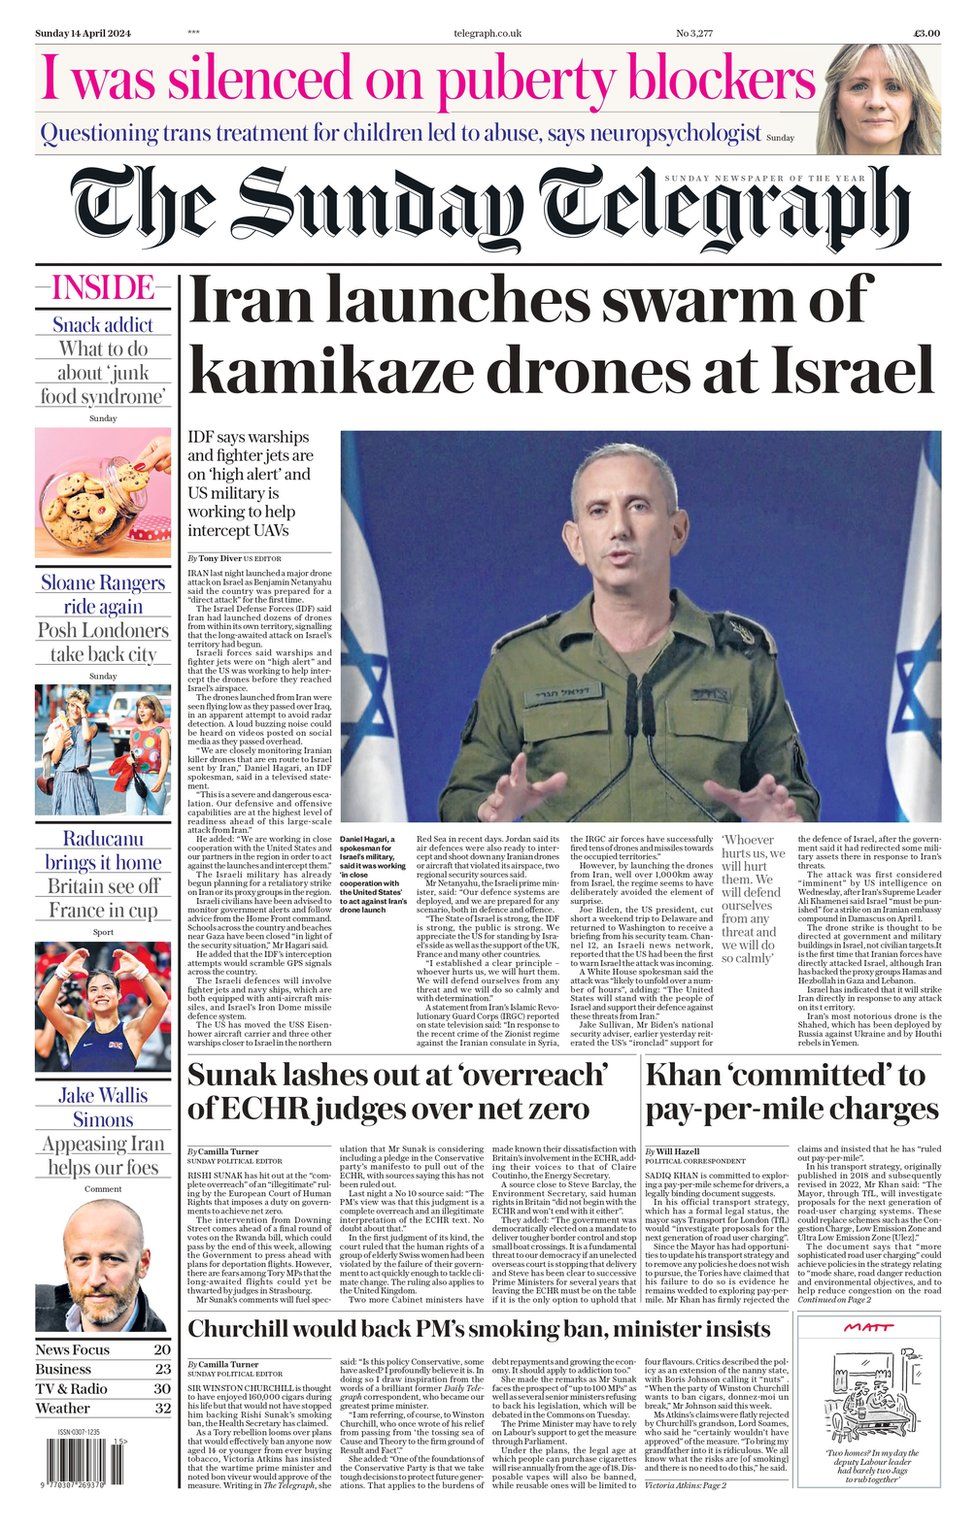 The Sunday Telegraph headline: Iran launches swarm of kamikaze drones at Israel